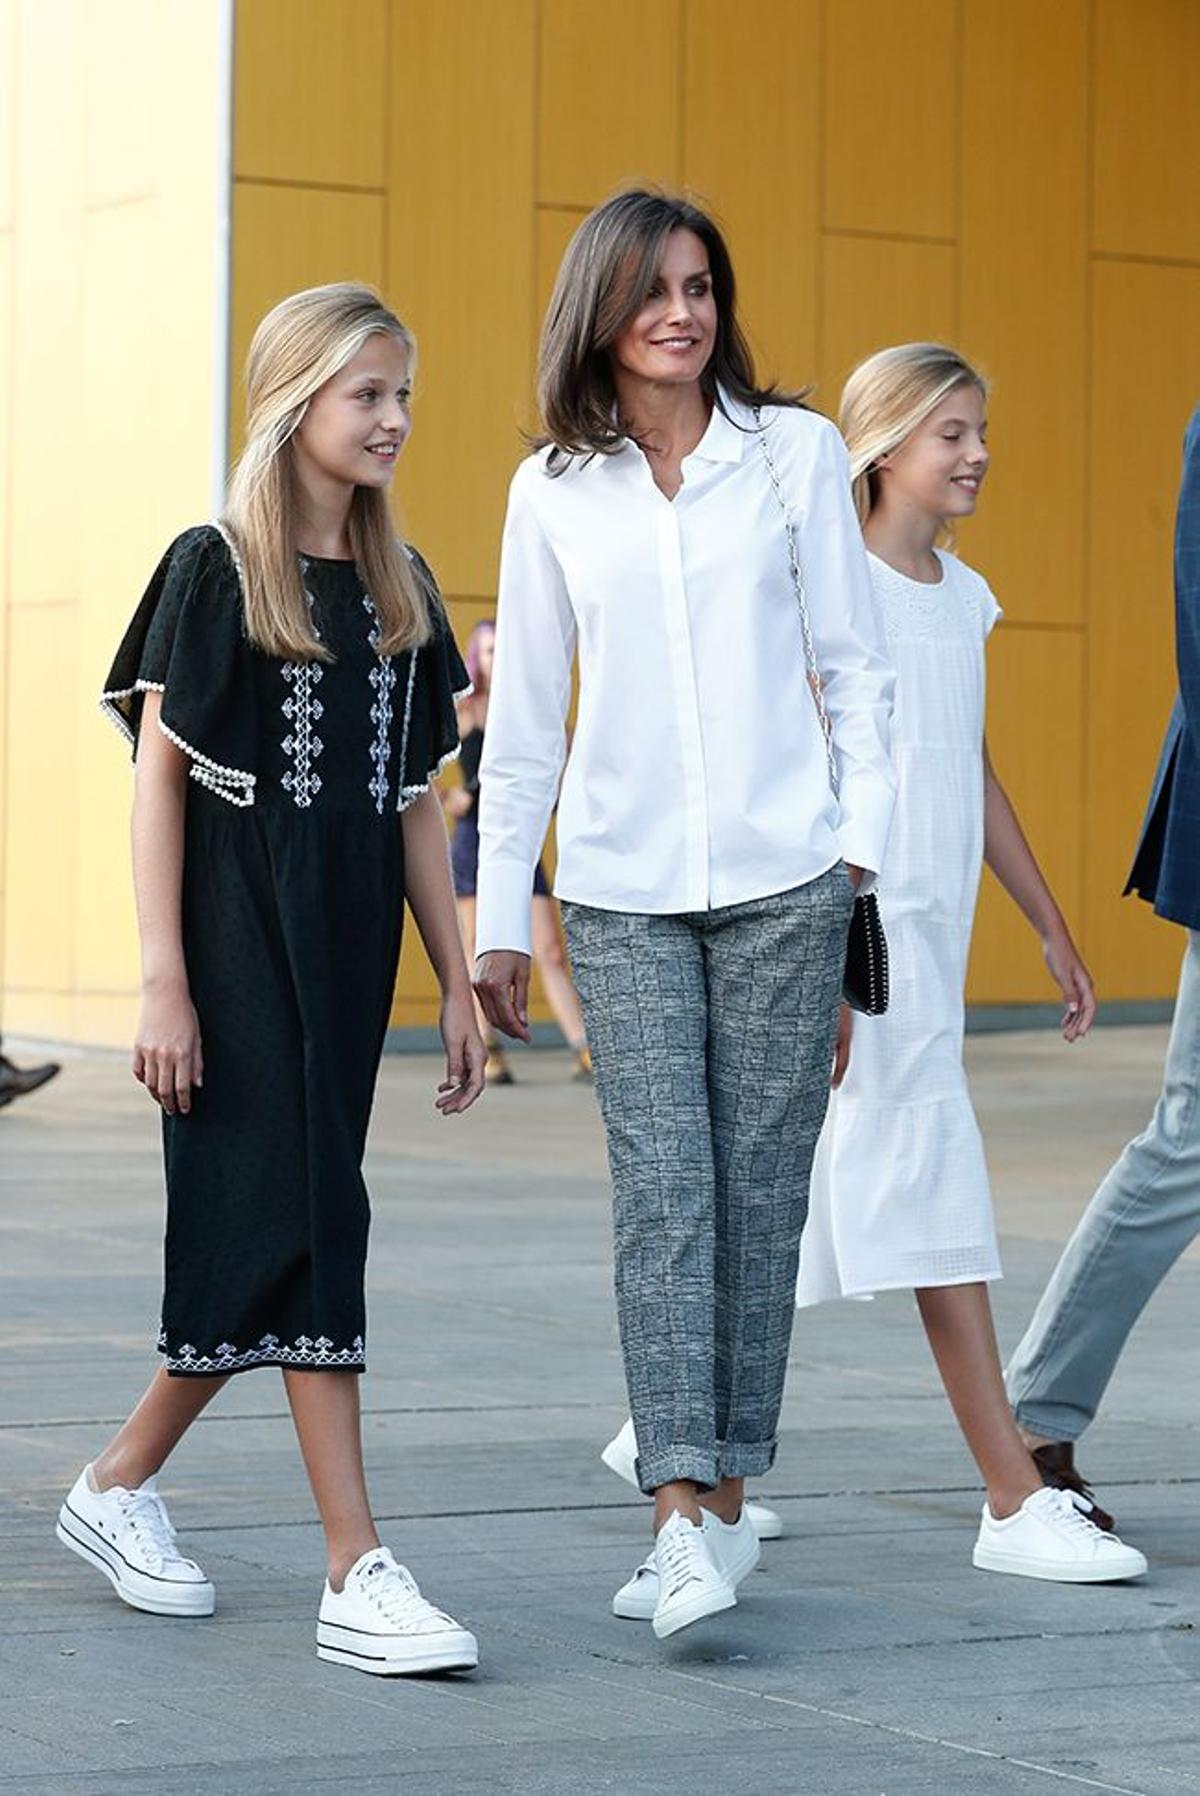 La reina Letizia junto a sus hijas saliendo del hospital